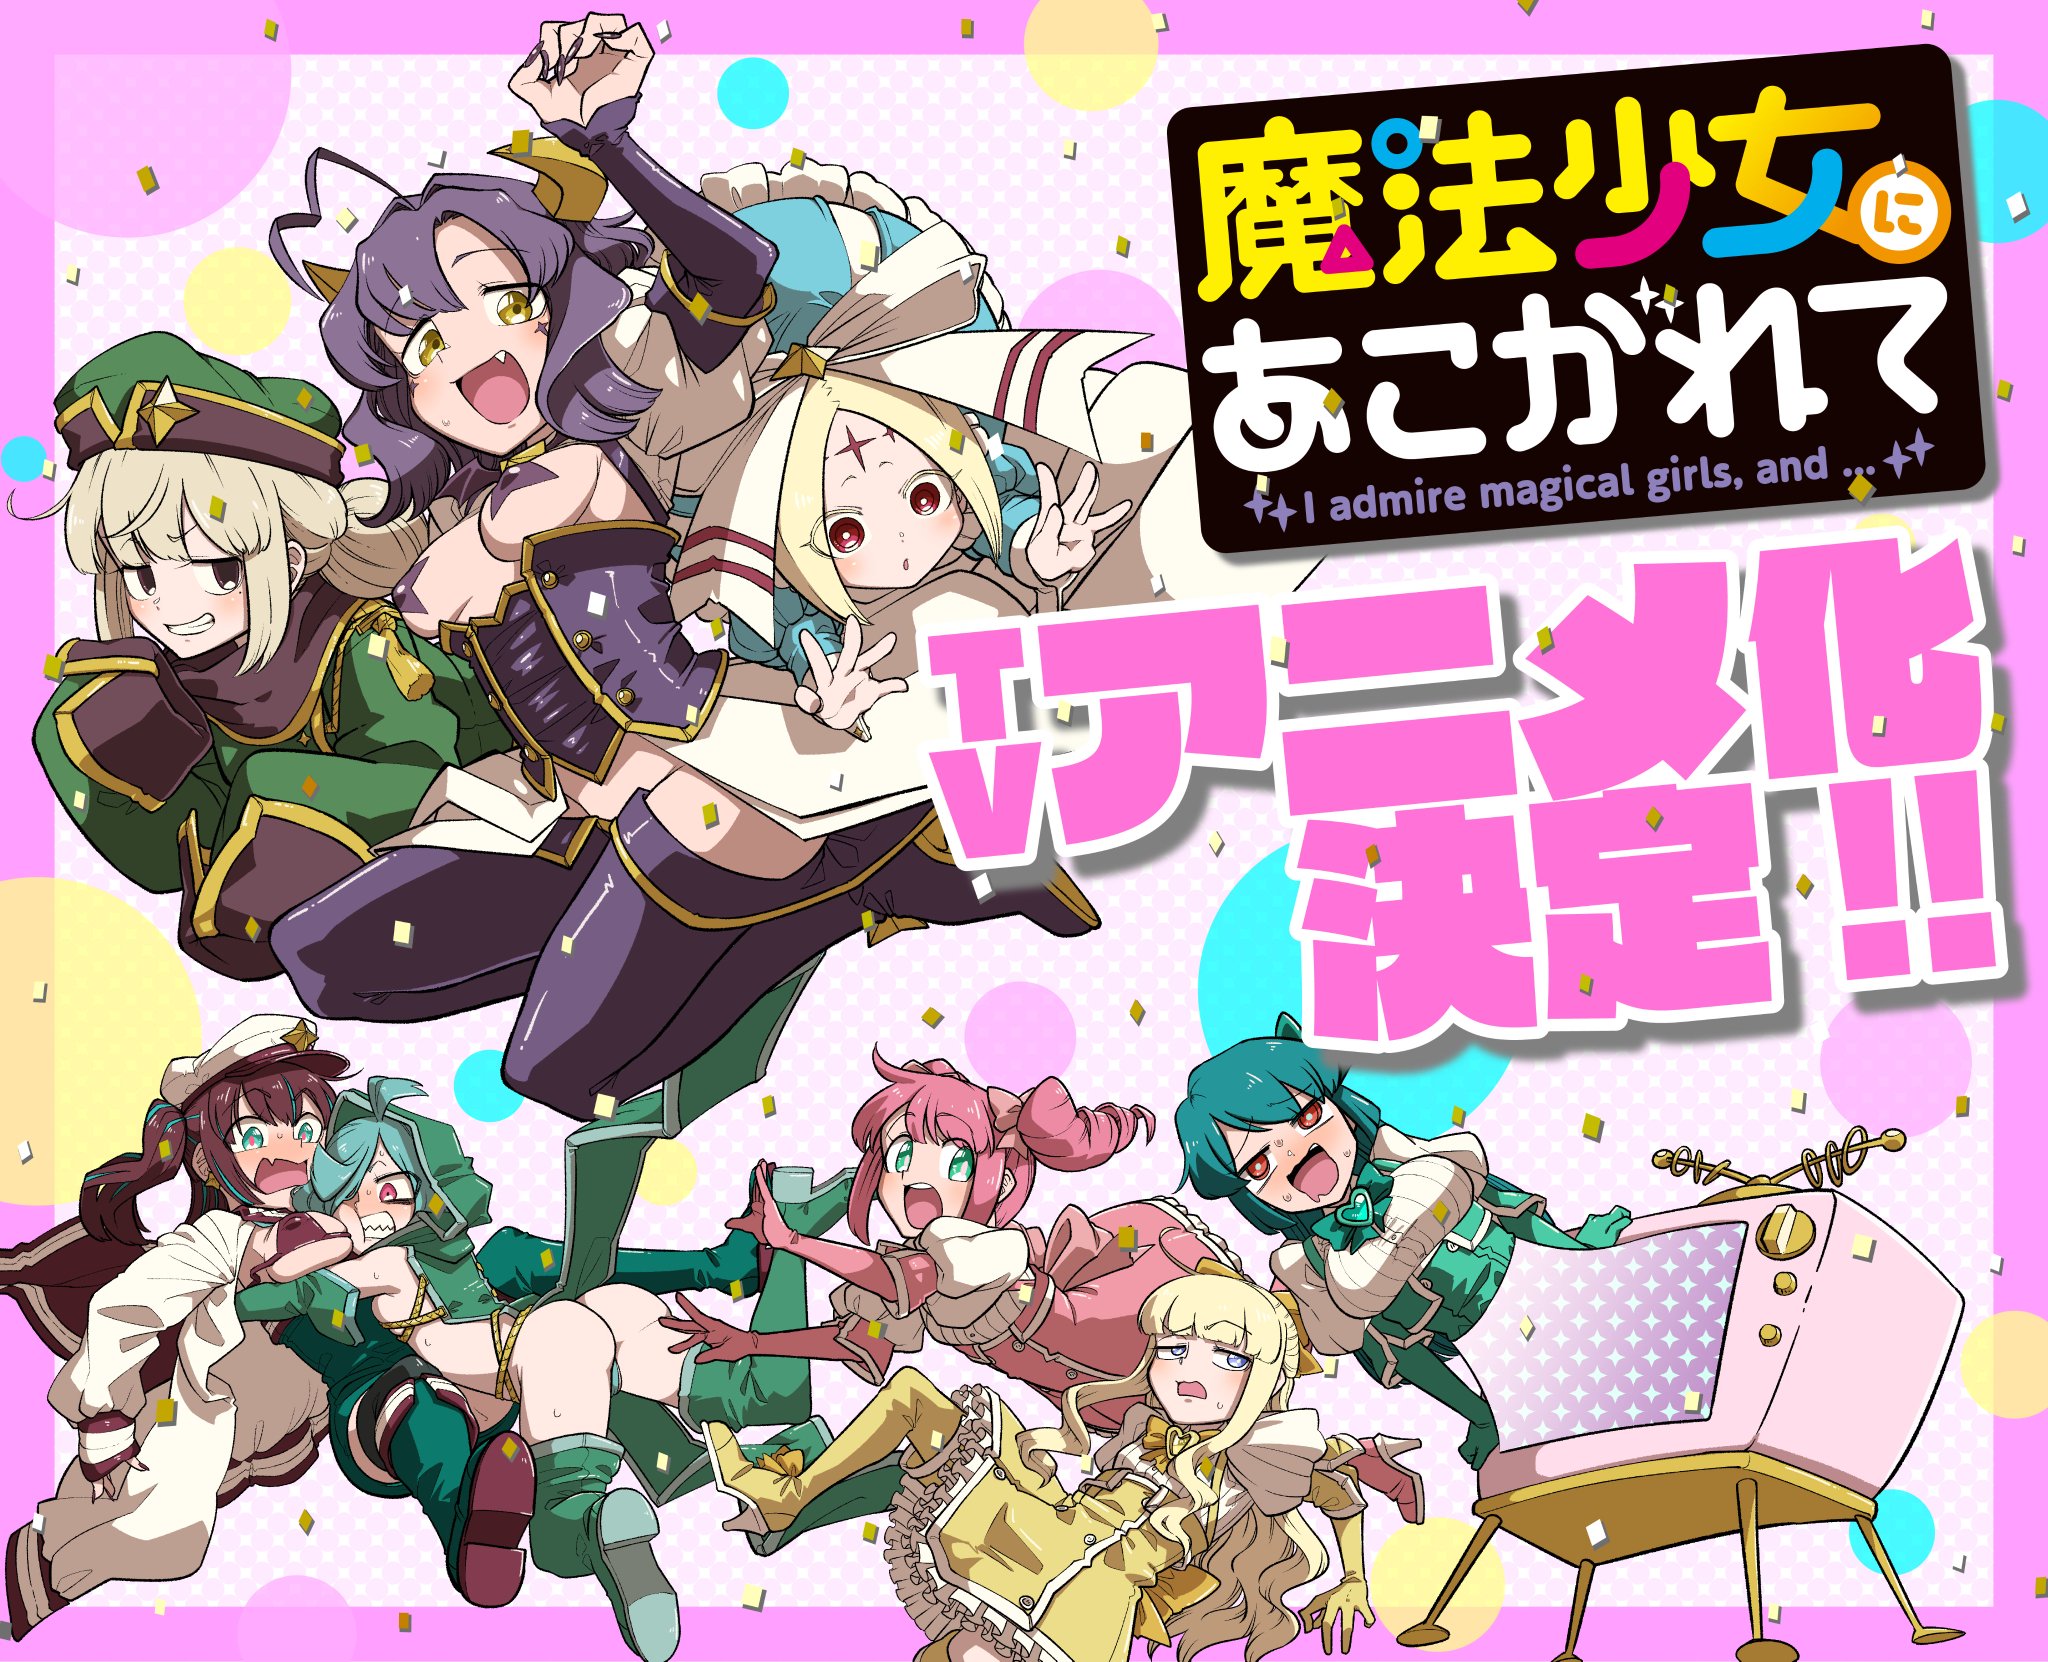 Crunchyroll - Gushing Over Magical Girls Comedy Manga Gets TV Anime  Adaptation